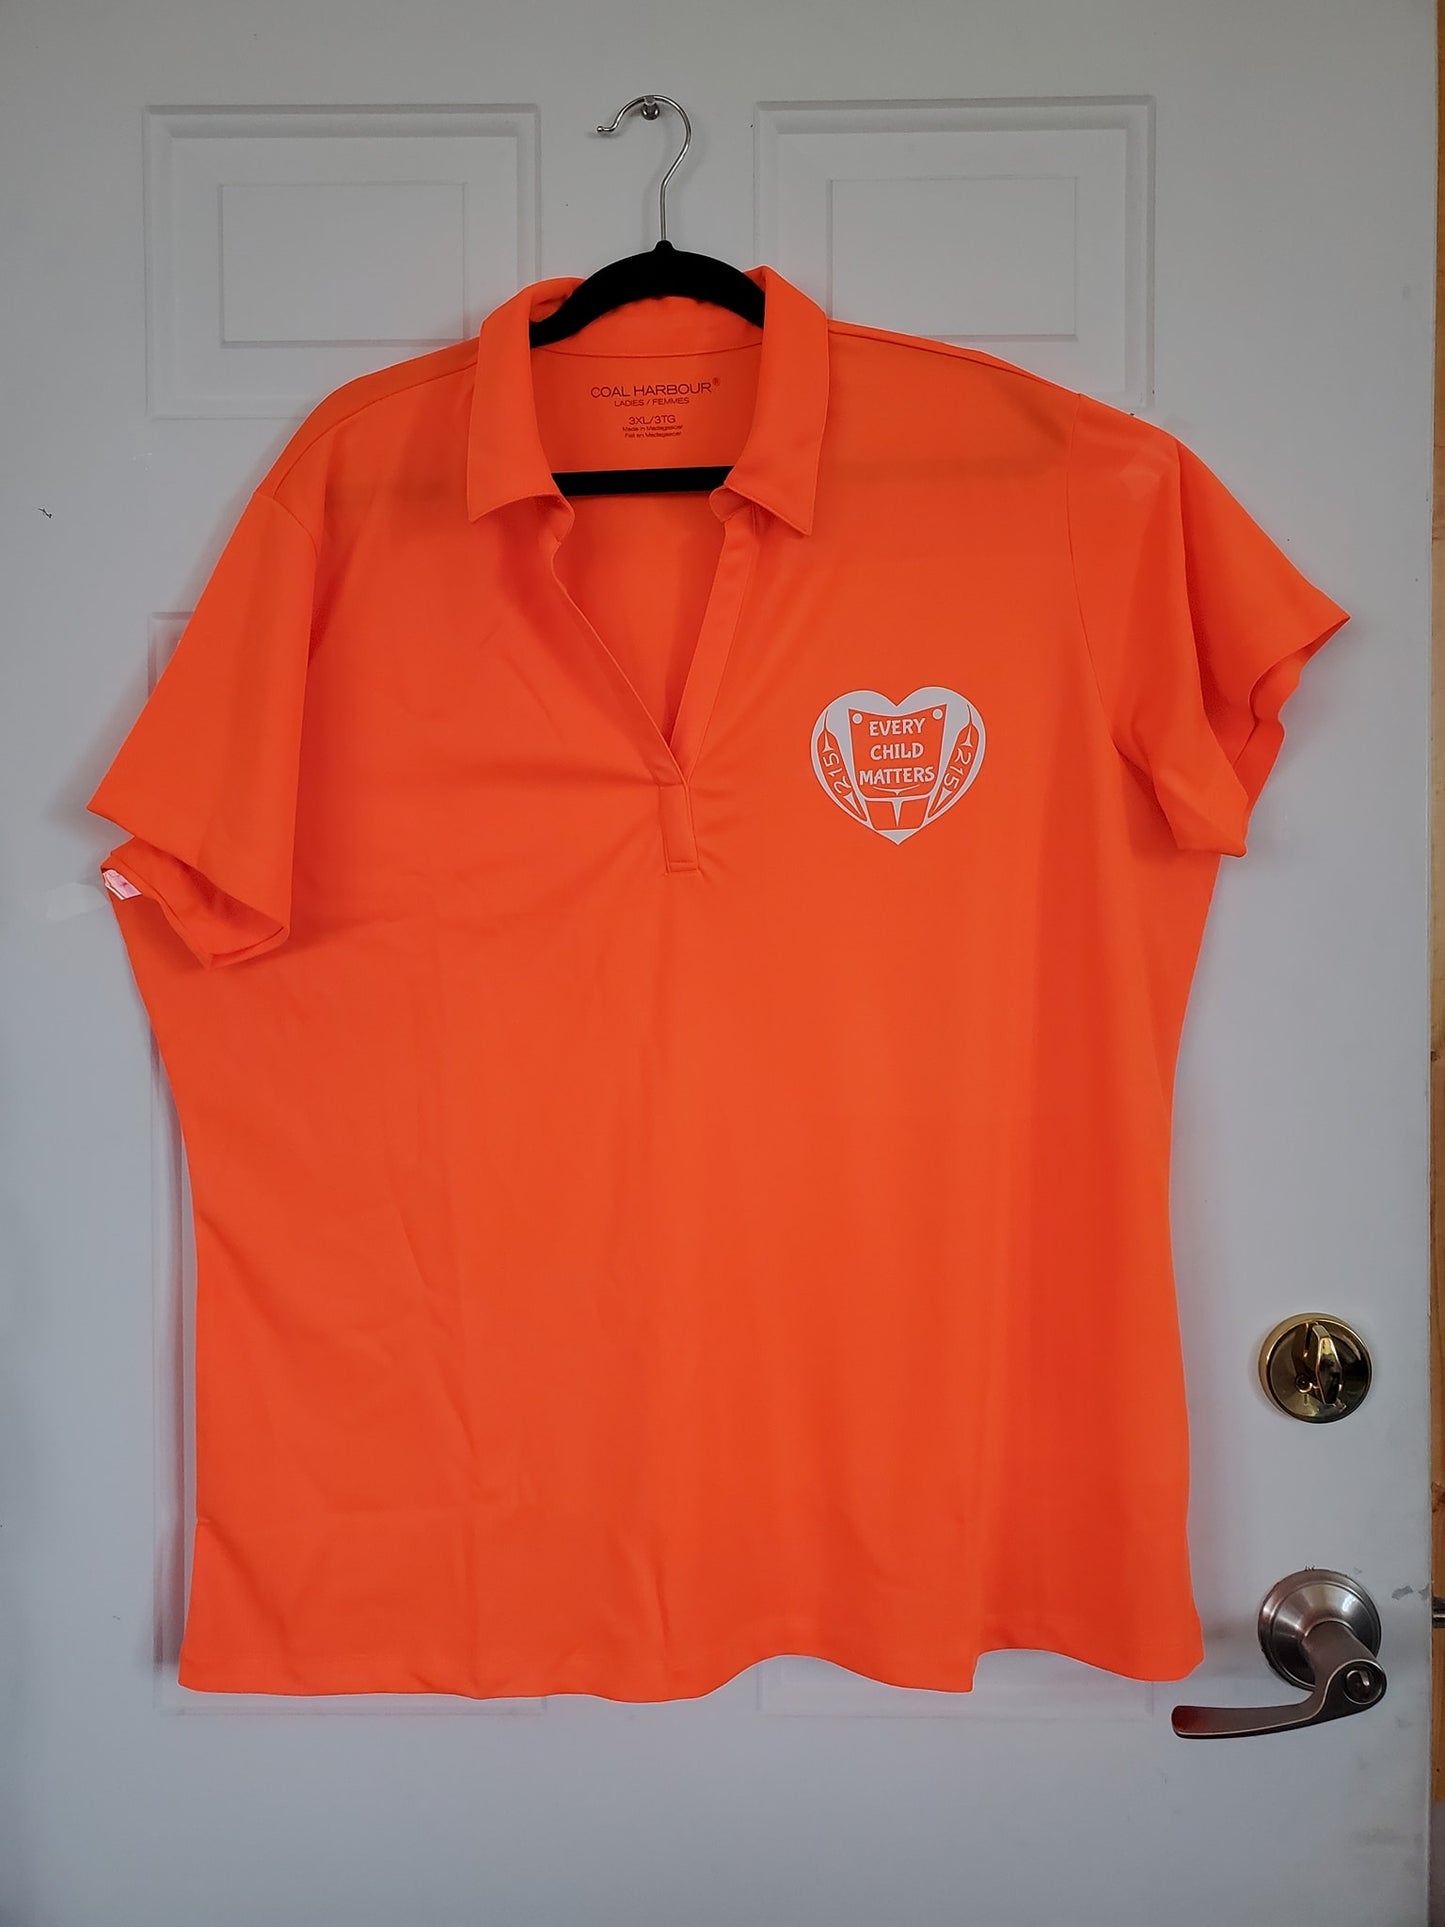 ECM Neon Orange Golf Shirt Ladies